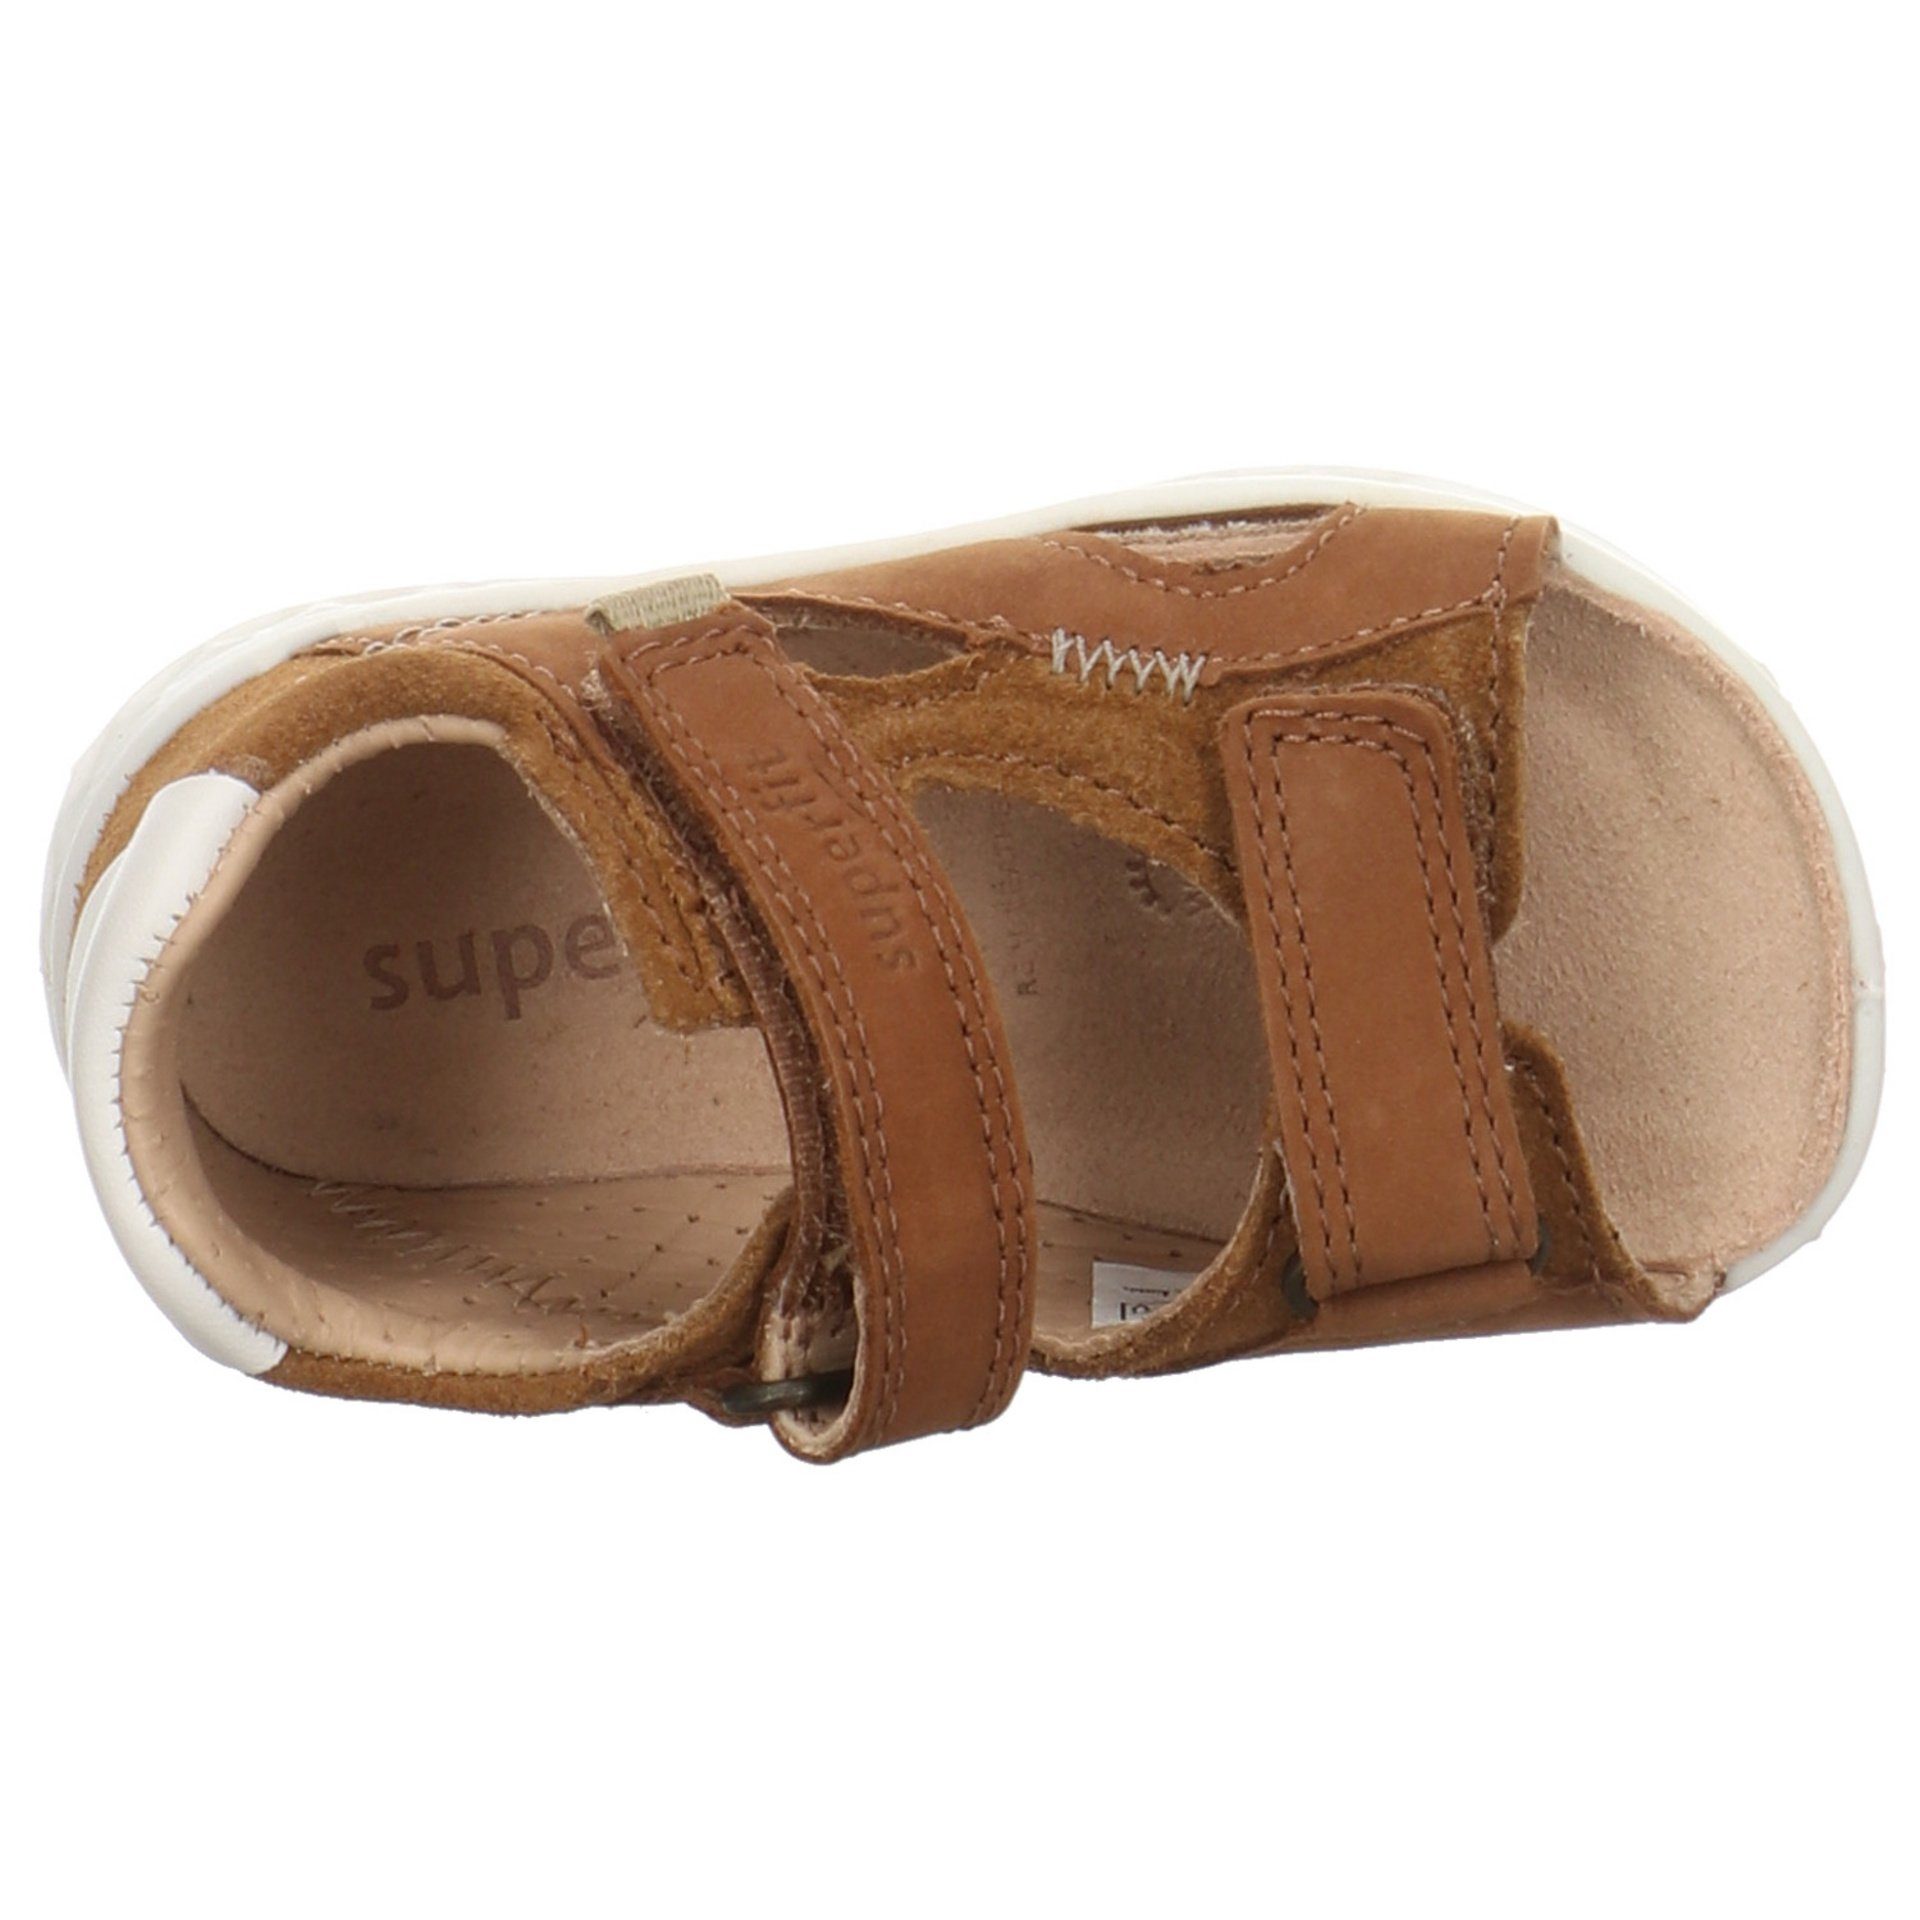 Lagoon Schuhe Superfit BRAUN/BEIGE Jungen Sandale Sandalen Kinderschuhe Lederkombination Sandale